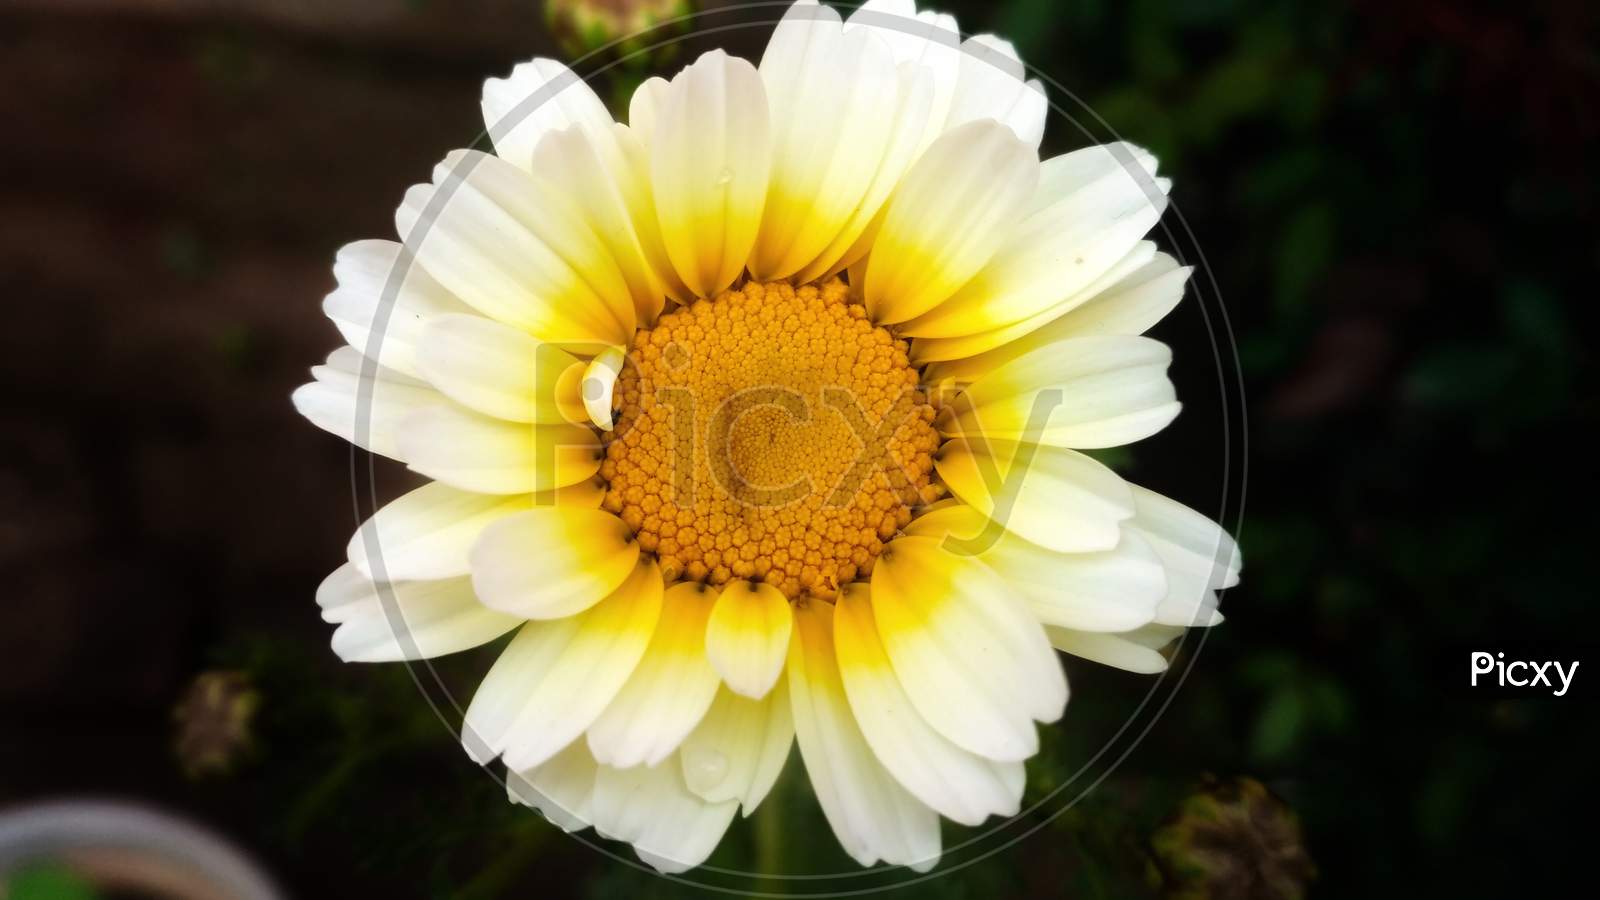 Barberton daisy flower.